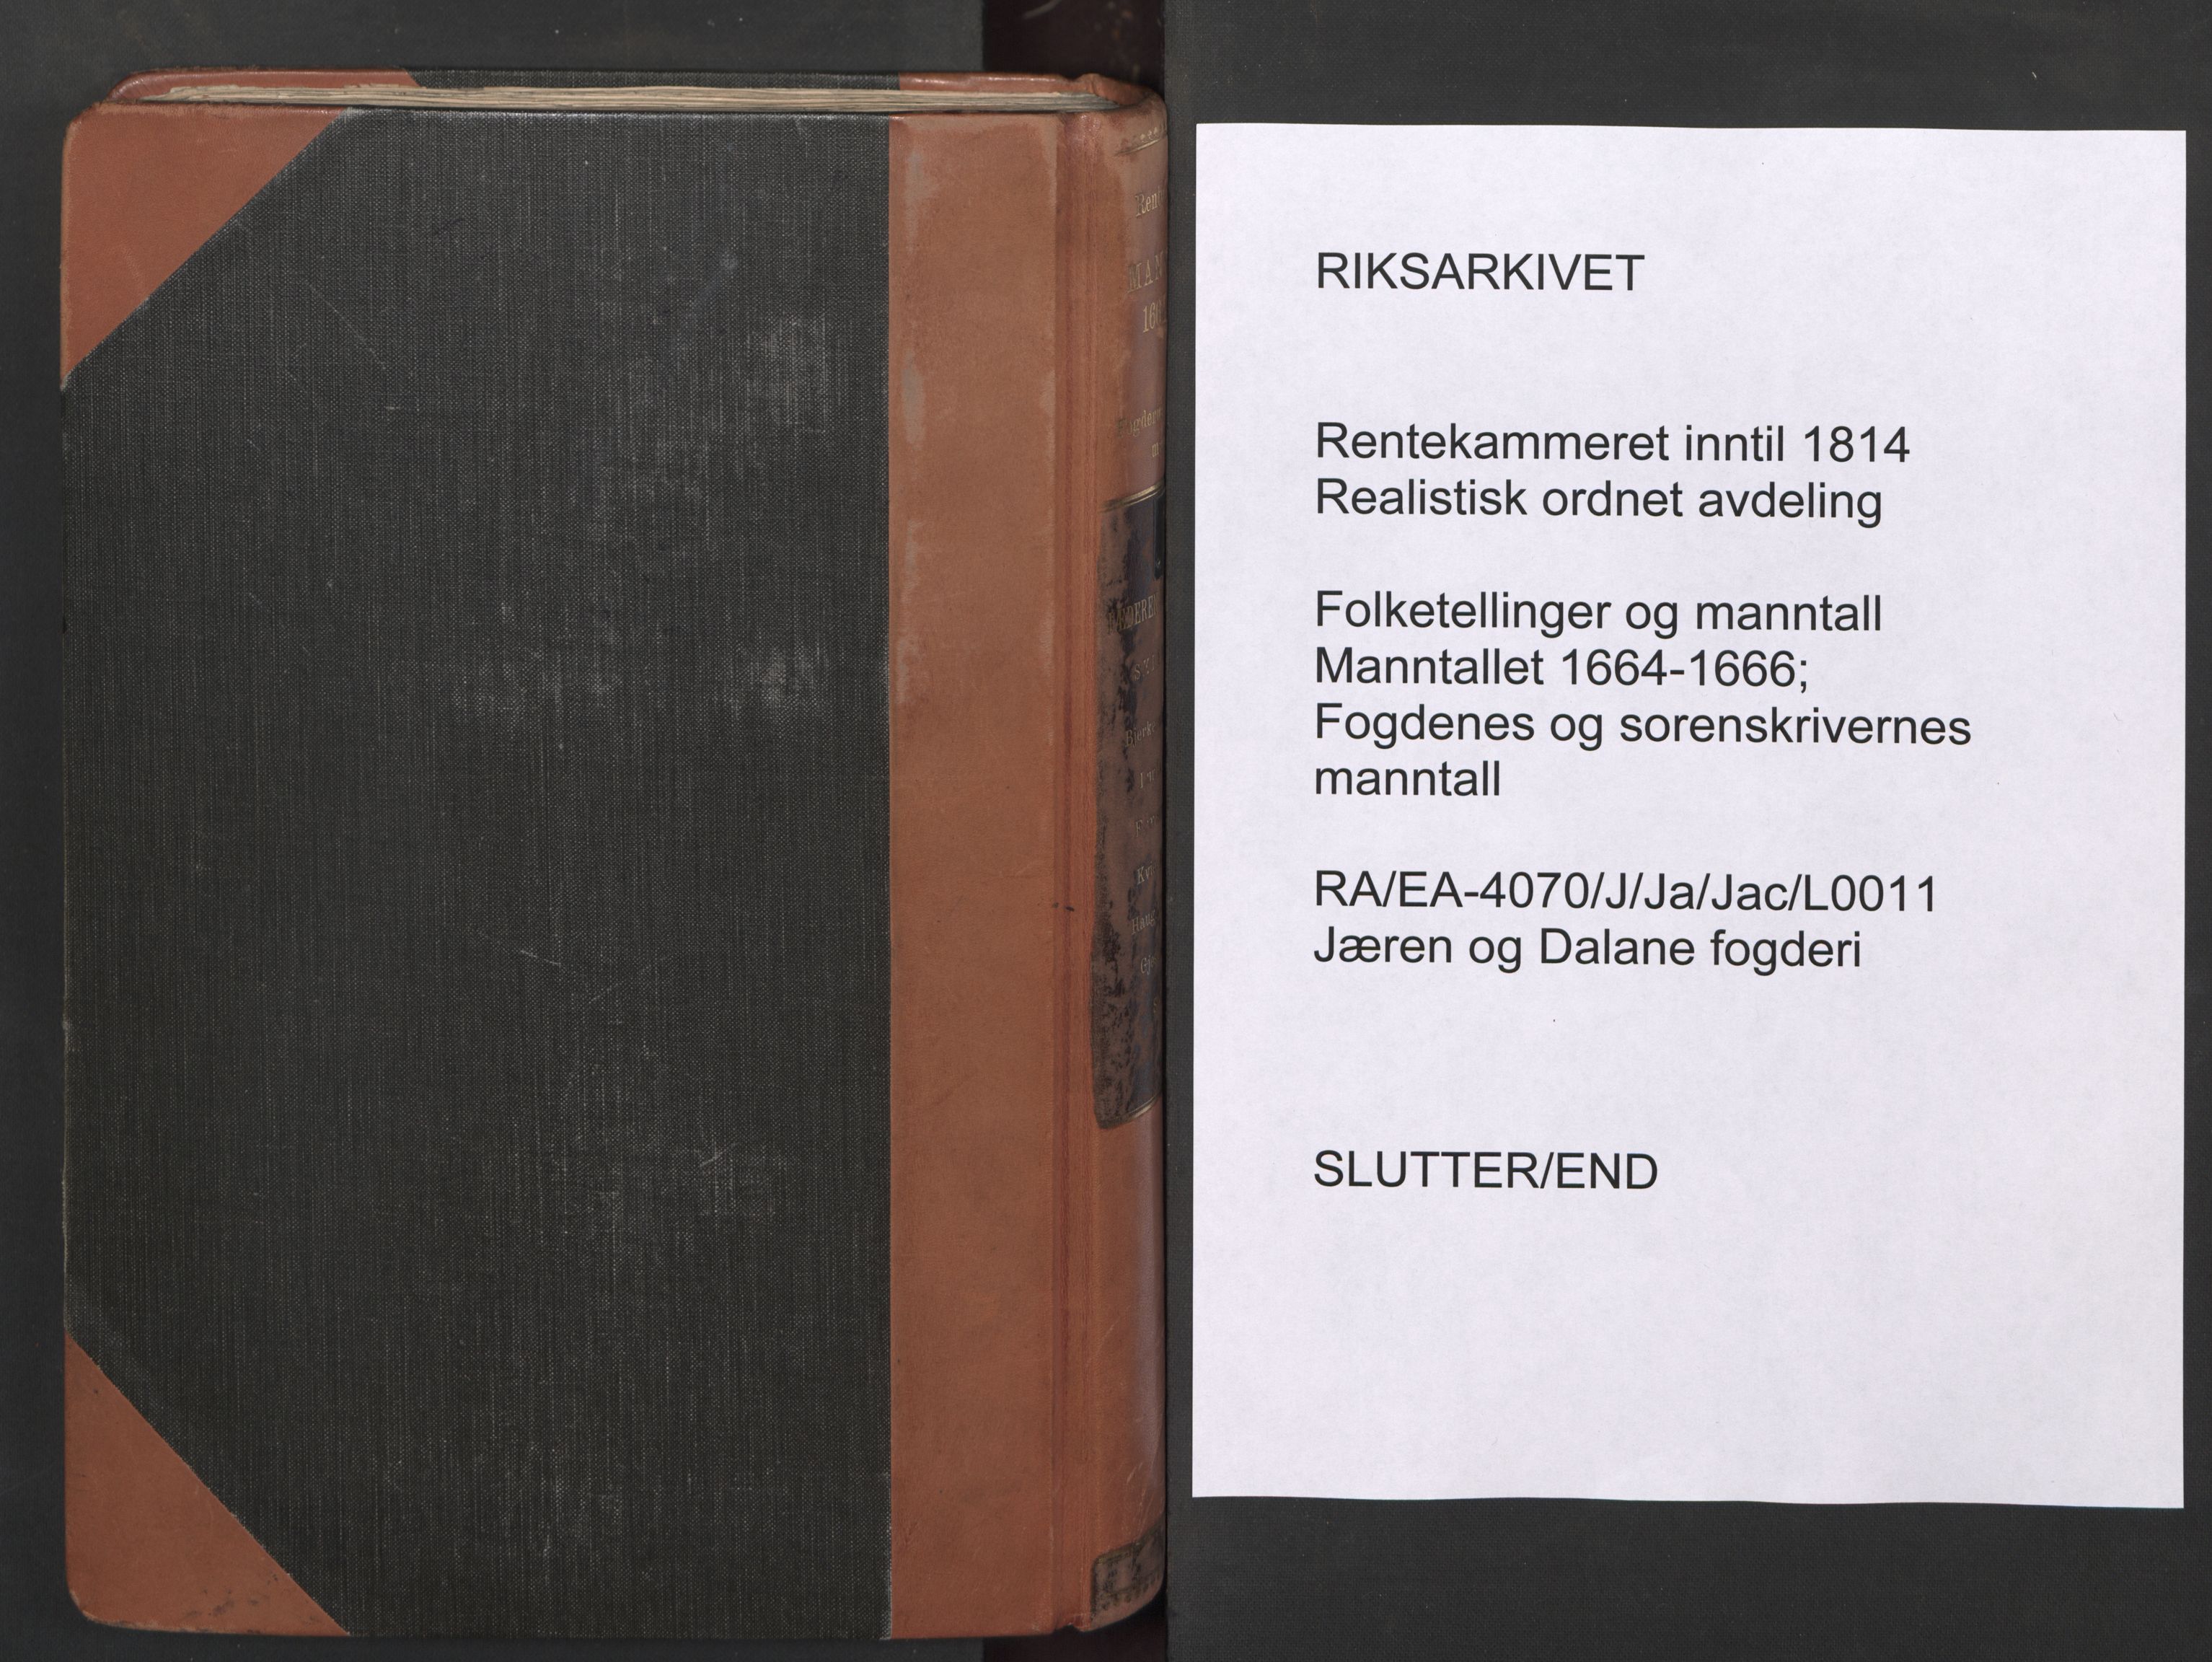 RA, Bailiff's Census 1664-1666, no. 11: Jæren and Dalane fogderi, 1664